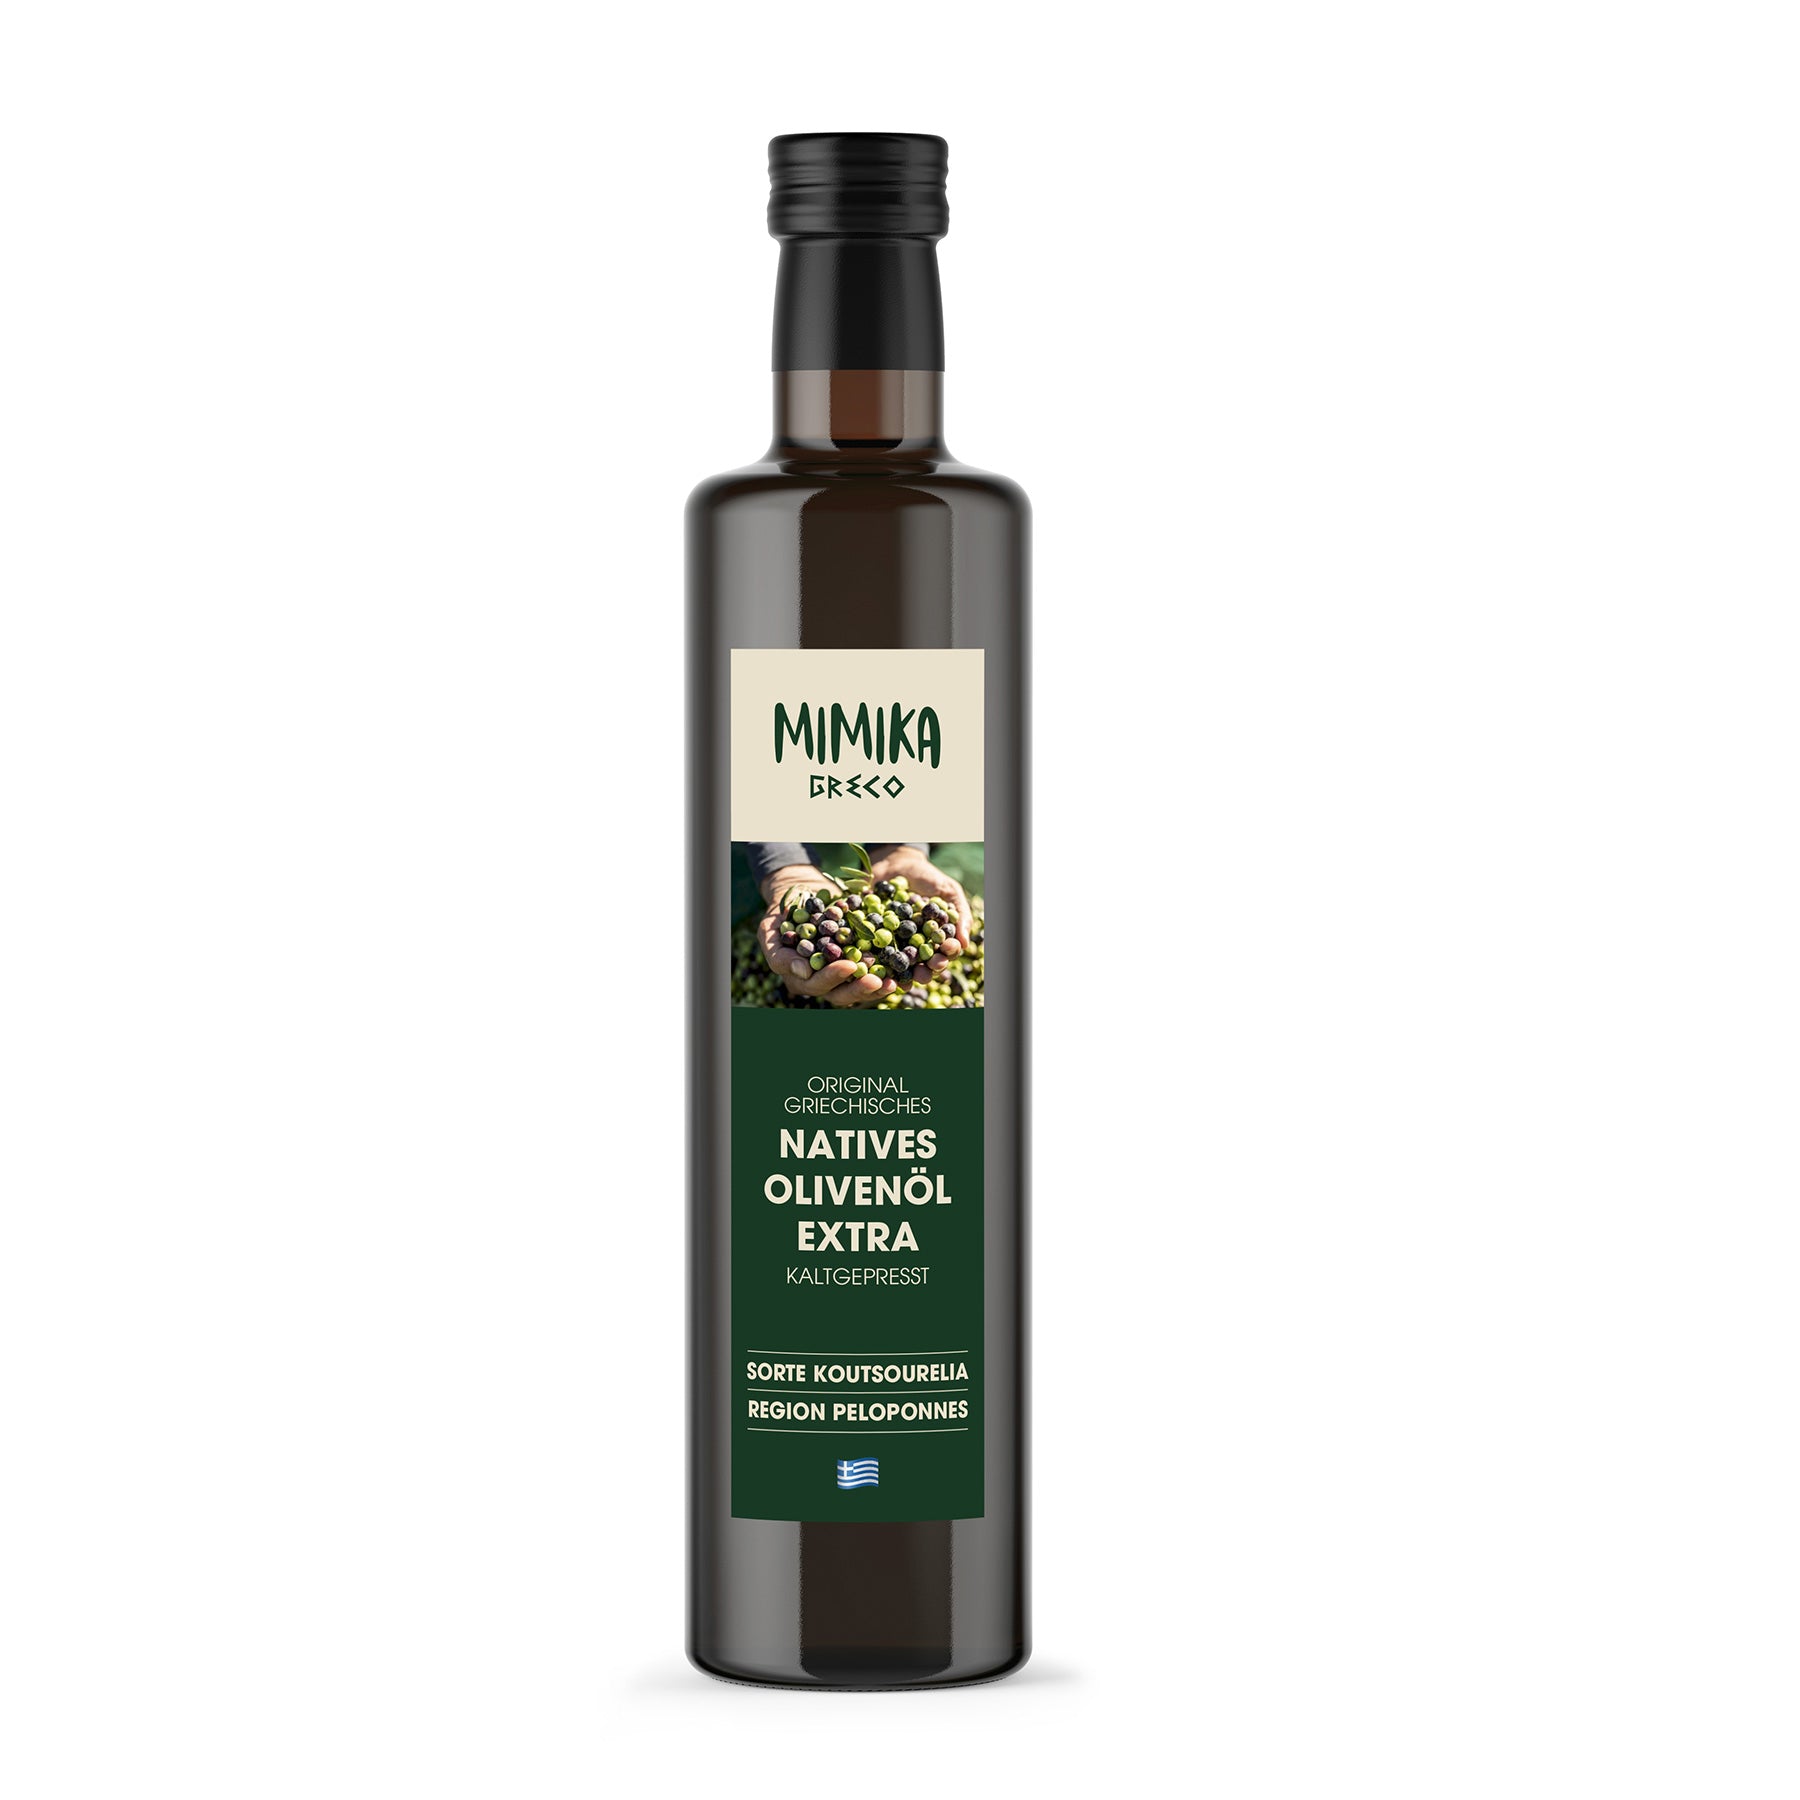 MIMIKA Natives Olivenöl EXTRA 750ml